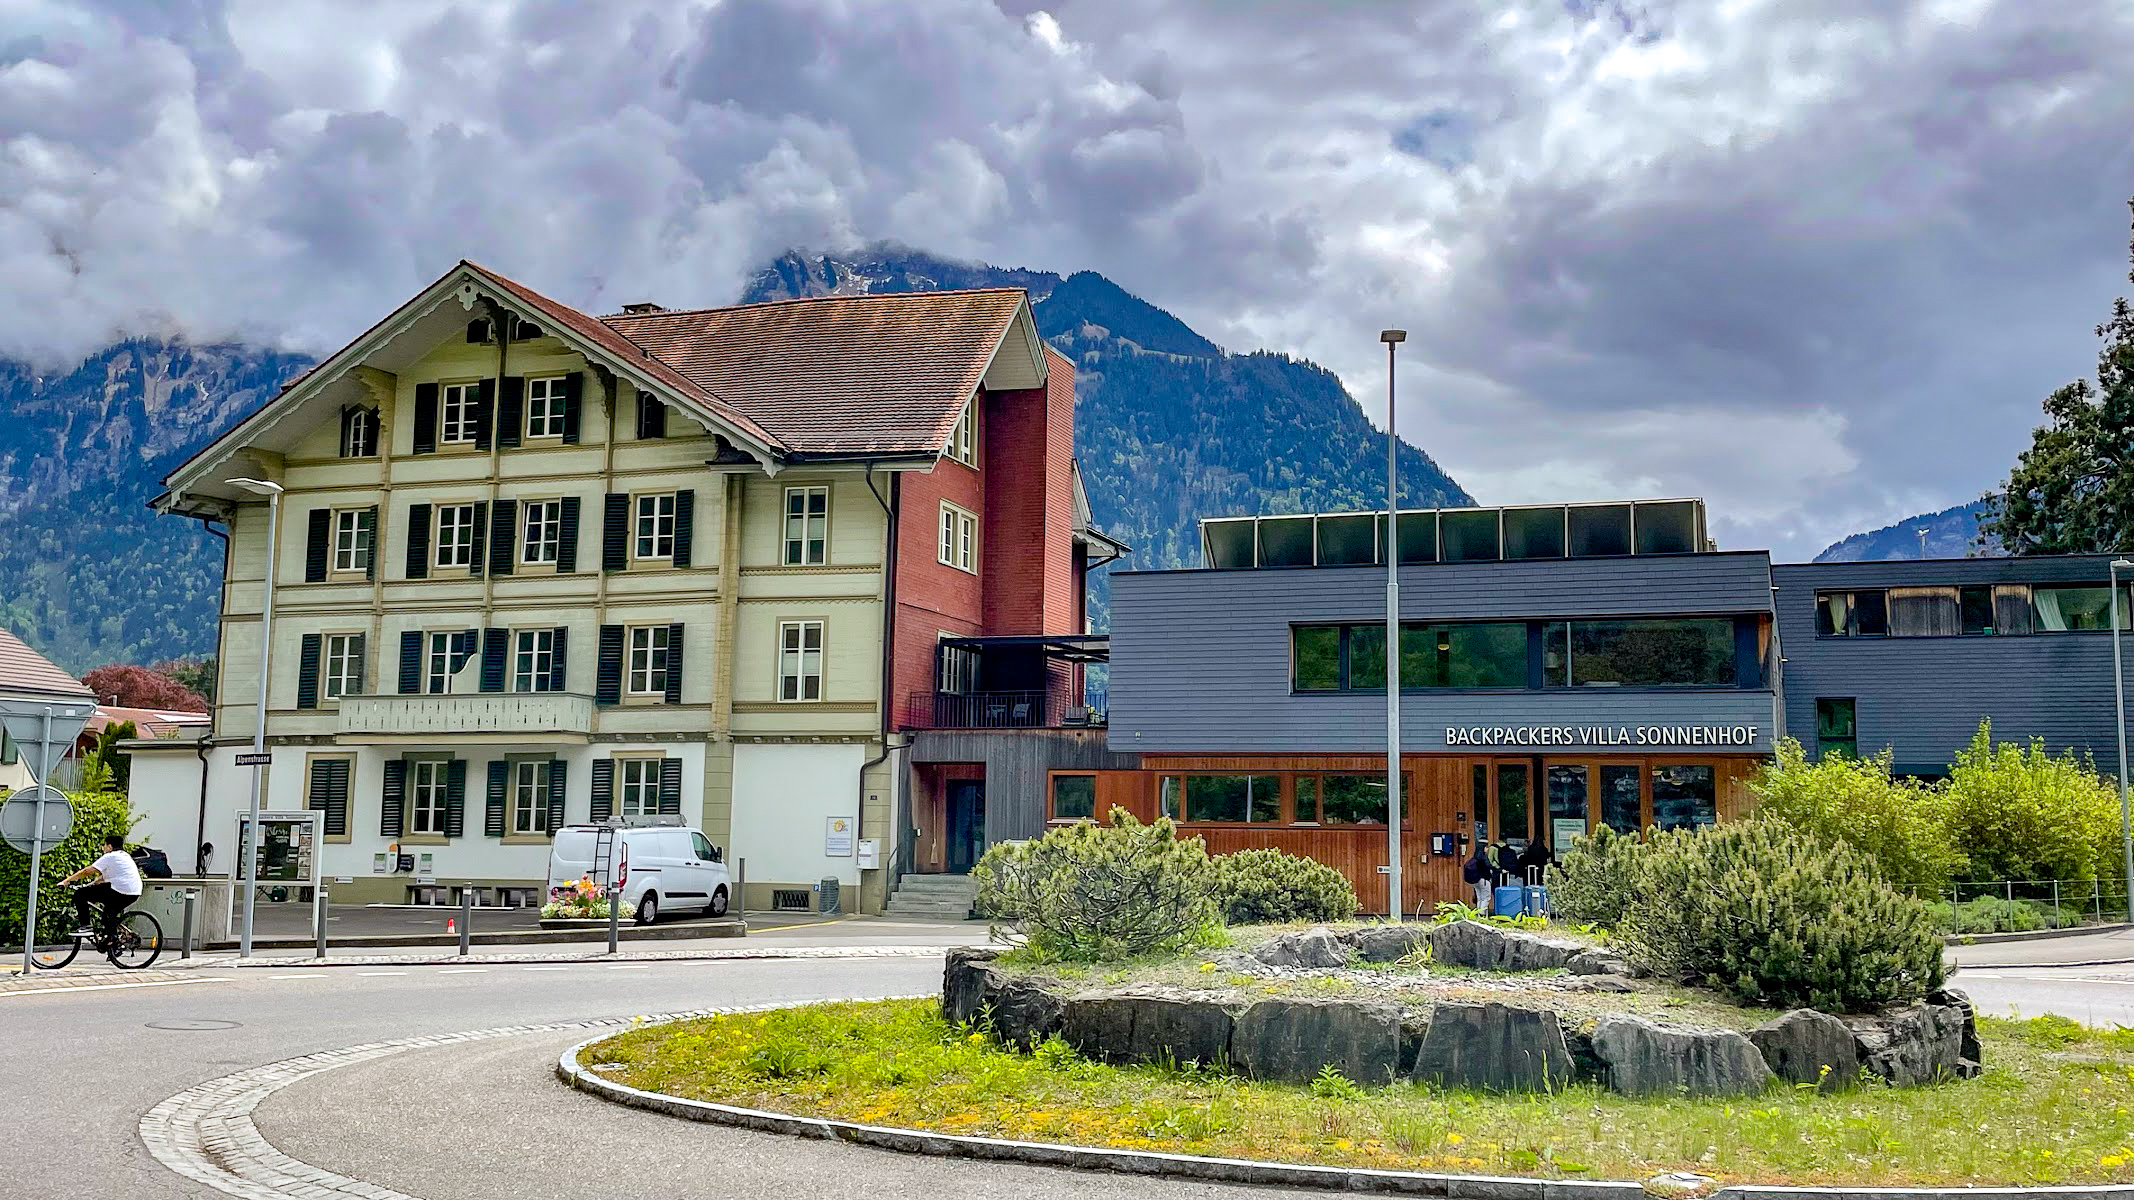 A Bed in Interlaken - Backpackers Villa Sonnenhof Review